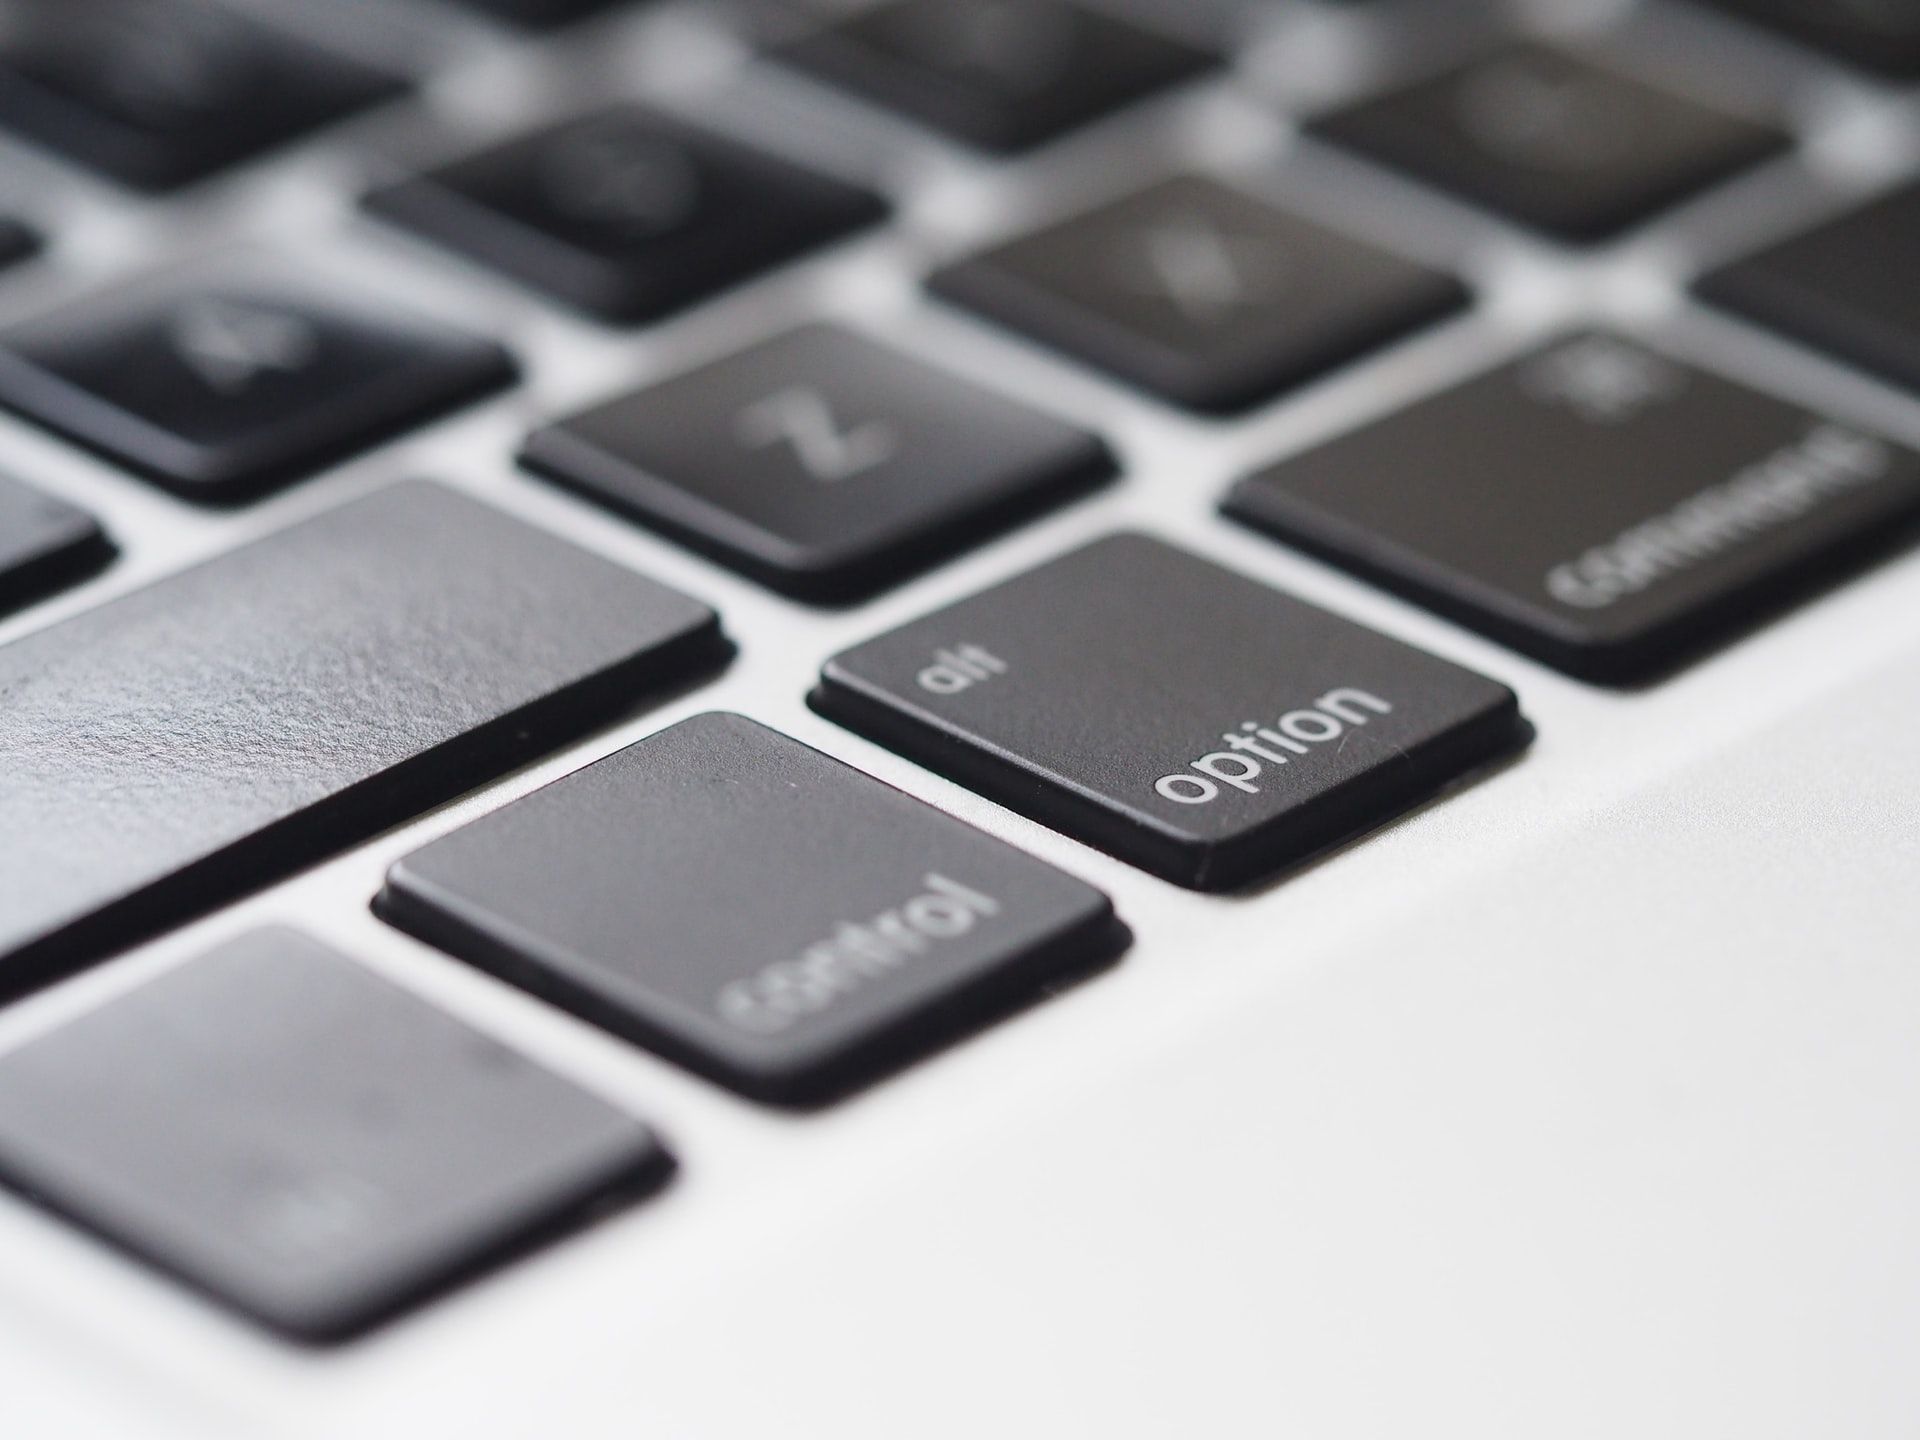 MacBook keyboard close-up